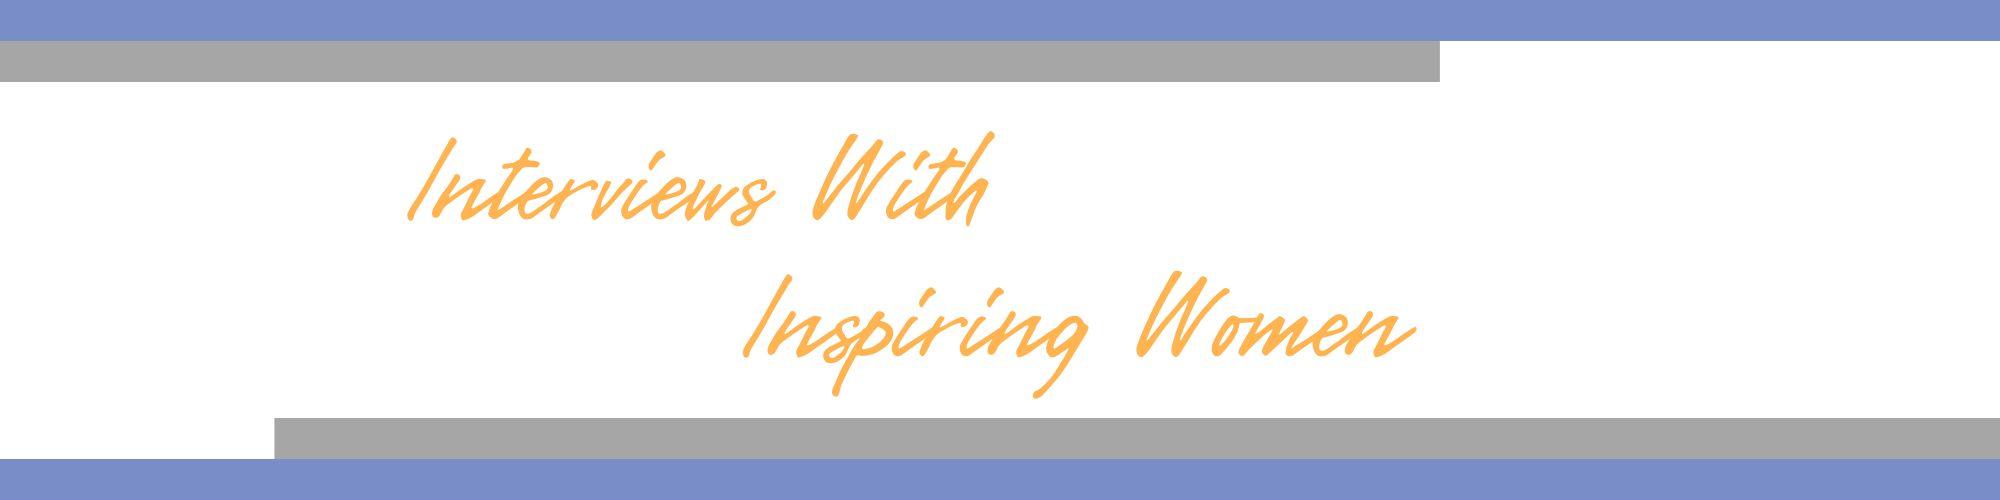 Interviews with Inspiring Womenm